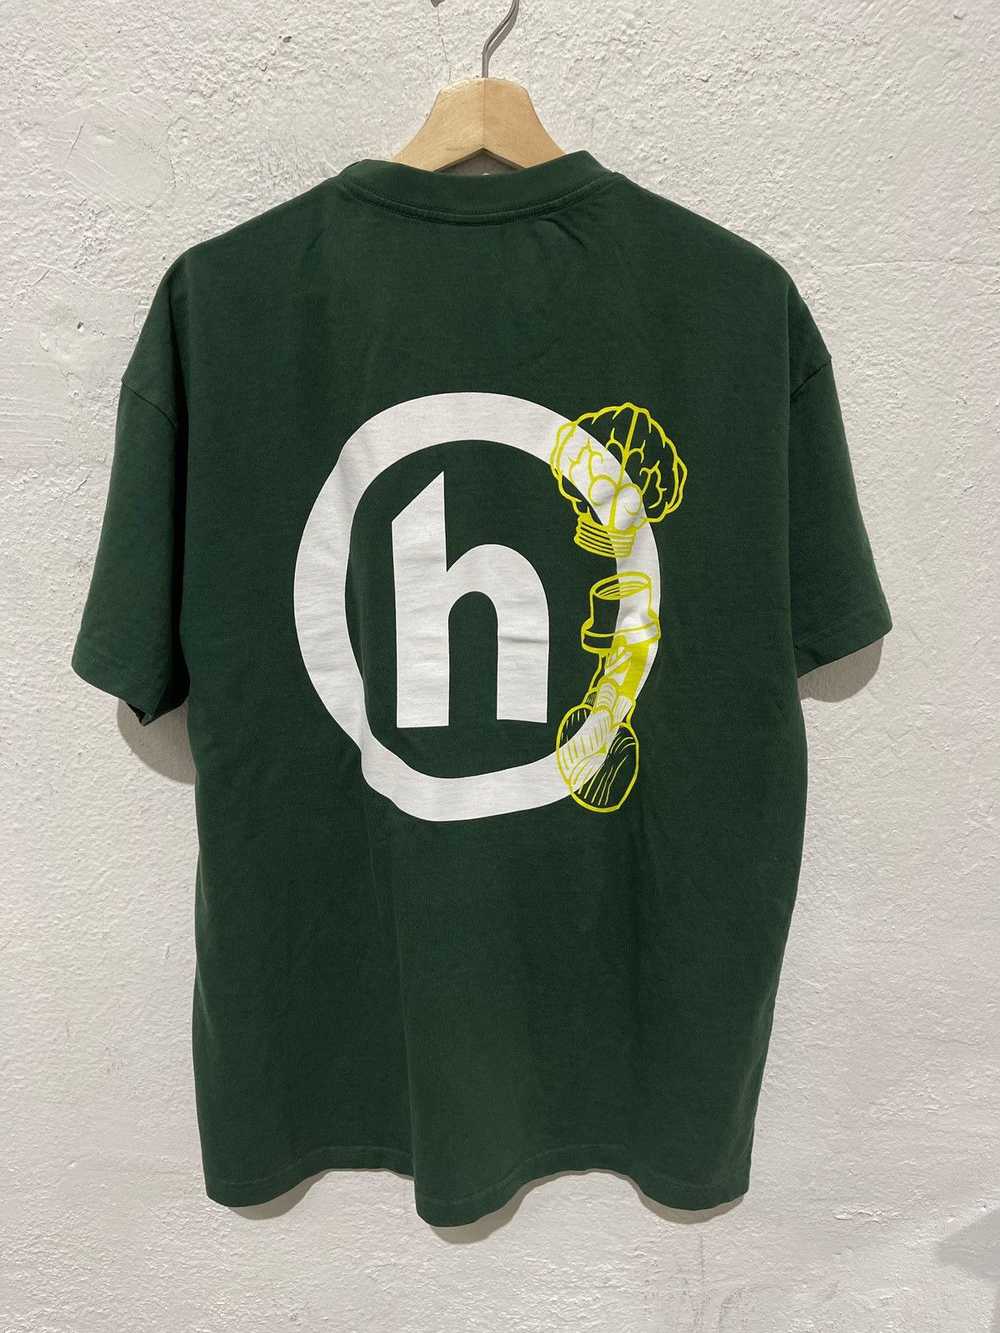 HIDDEN HIDDEN NY x NERD Green Logo Tshirt - image 2